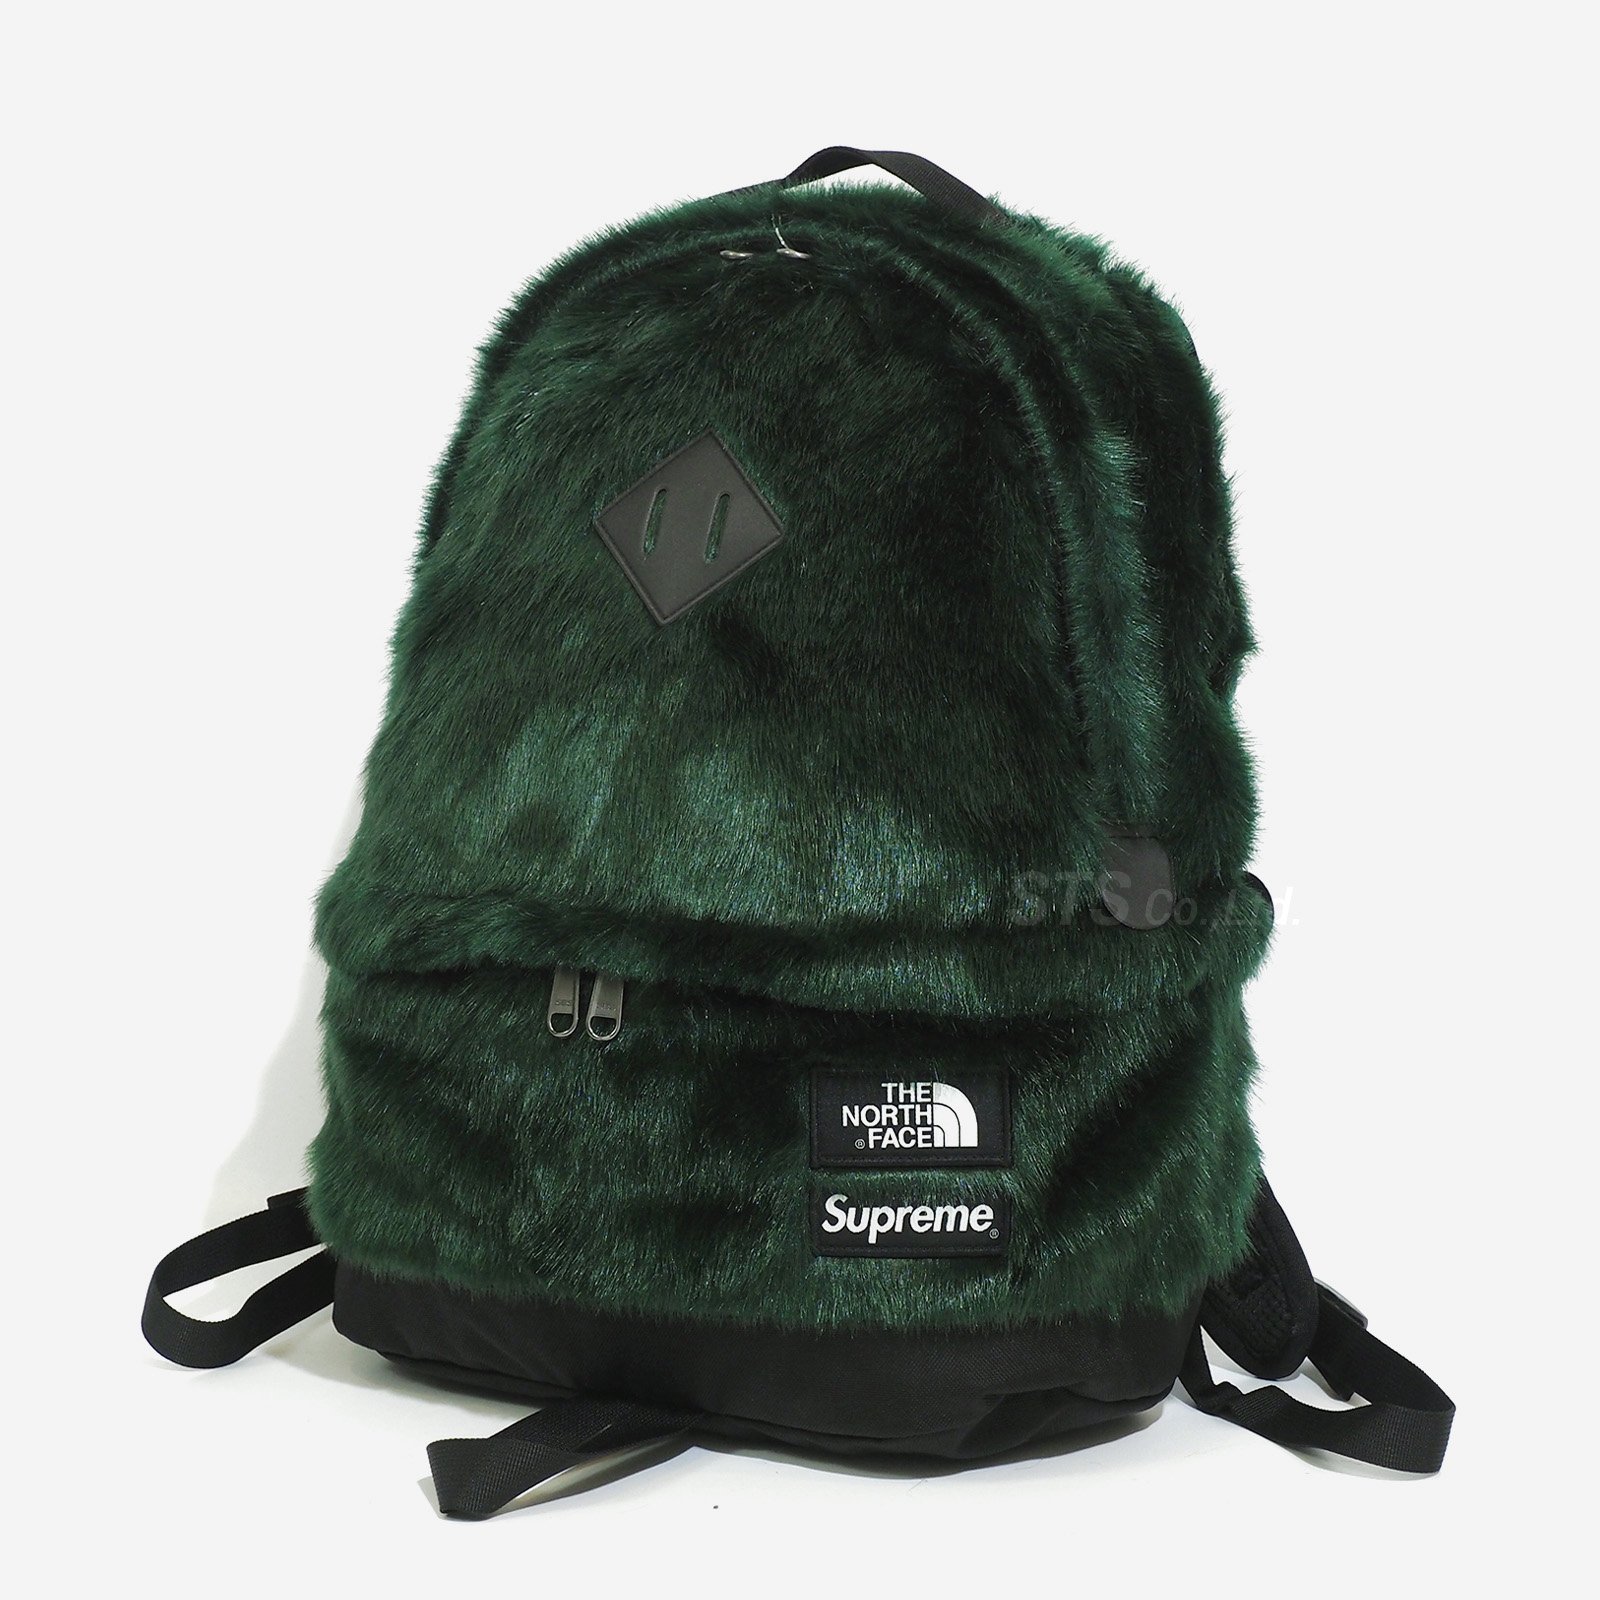 Supreme/The North Face Faux Fur Backpack - ParkSIDER